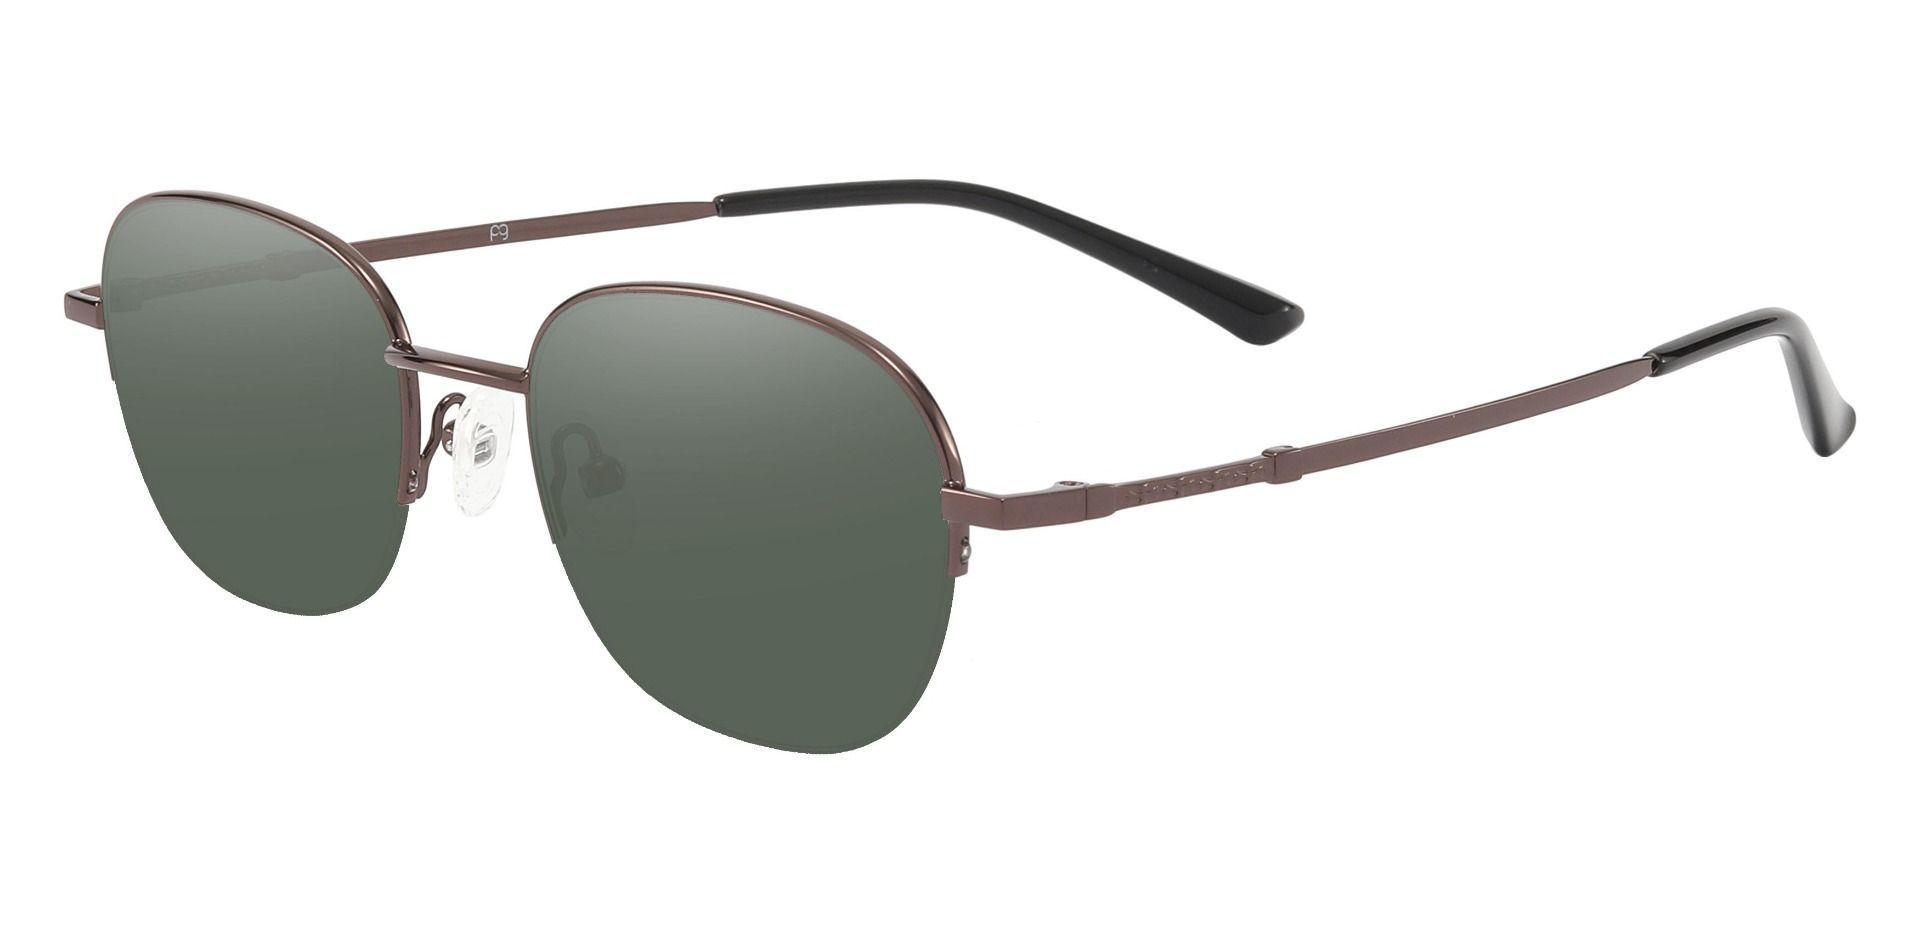 Rochester Oval Progressive Sunglasses - Brown Frame With Green Lenses